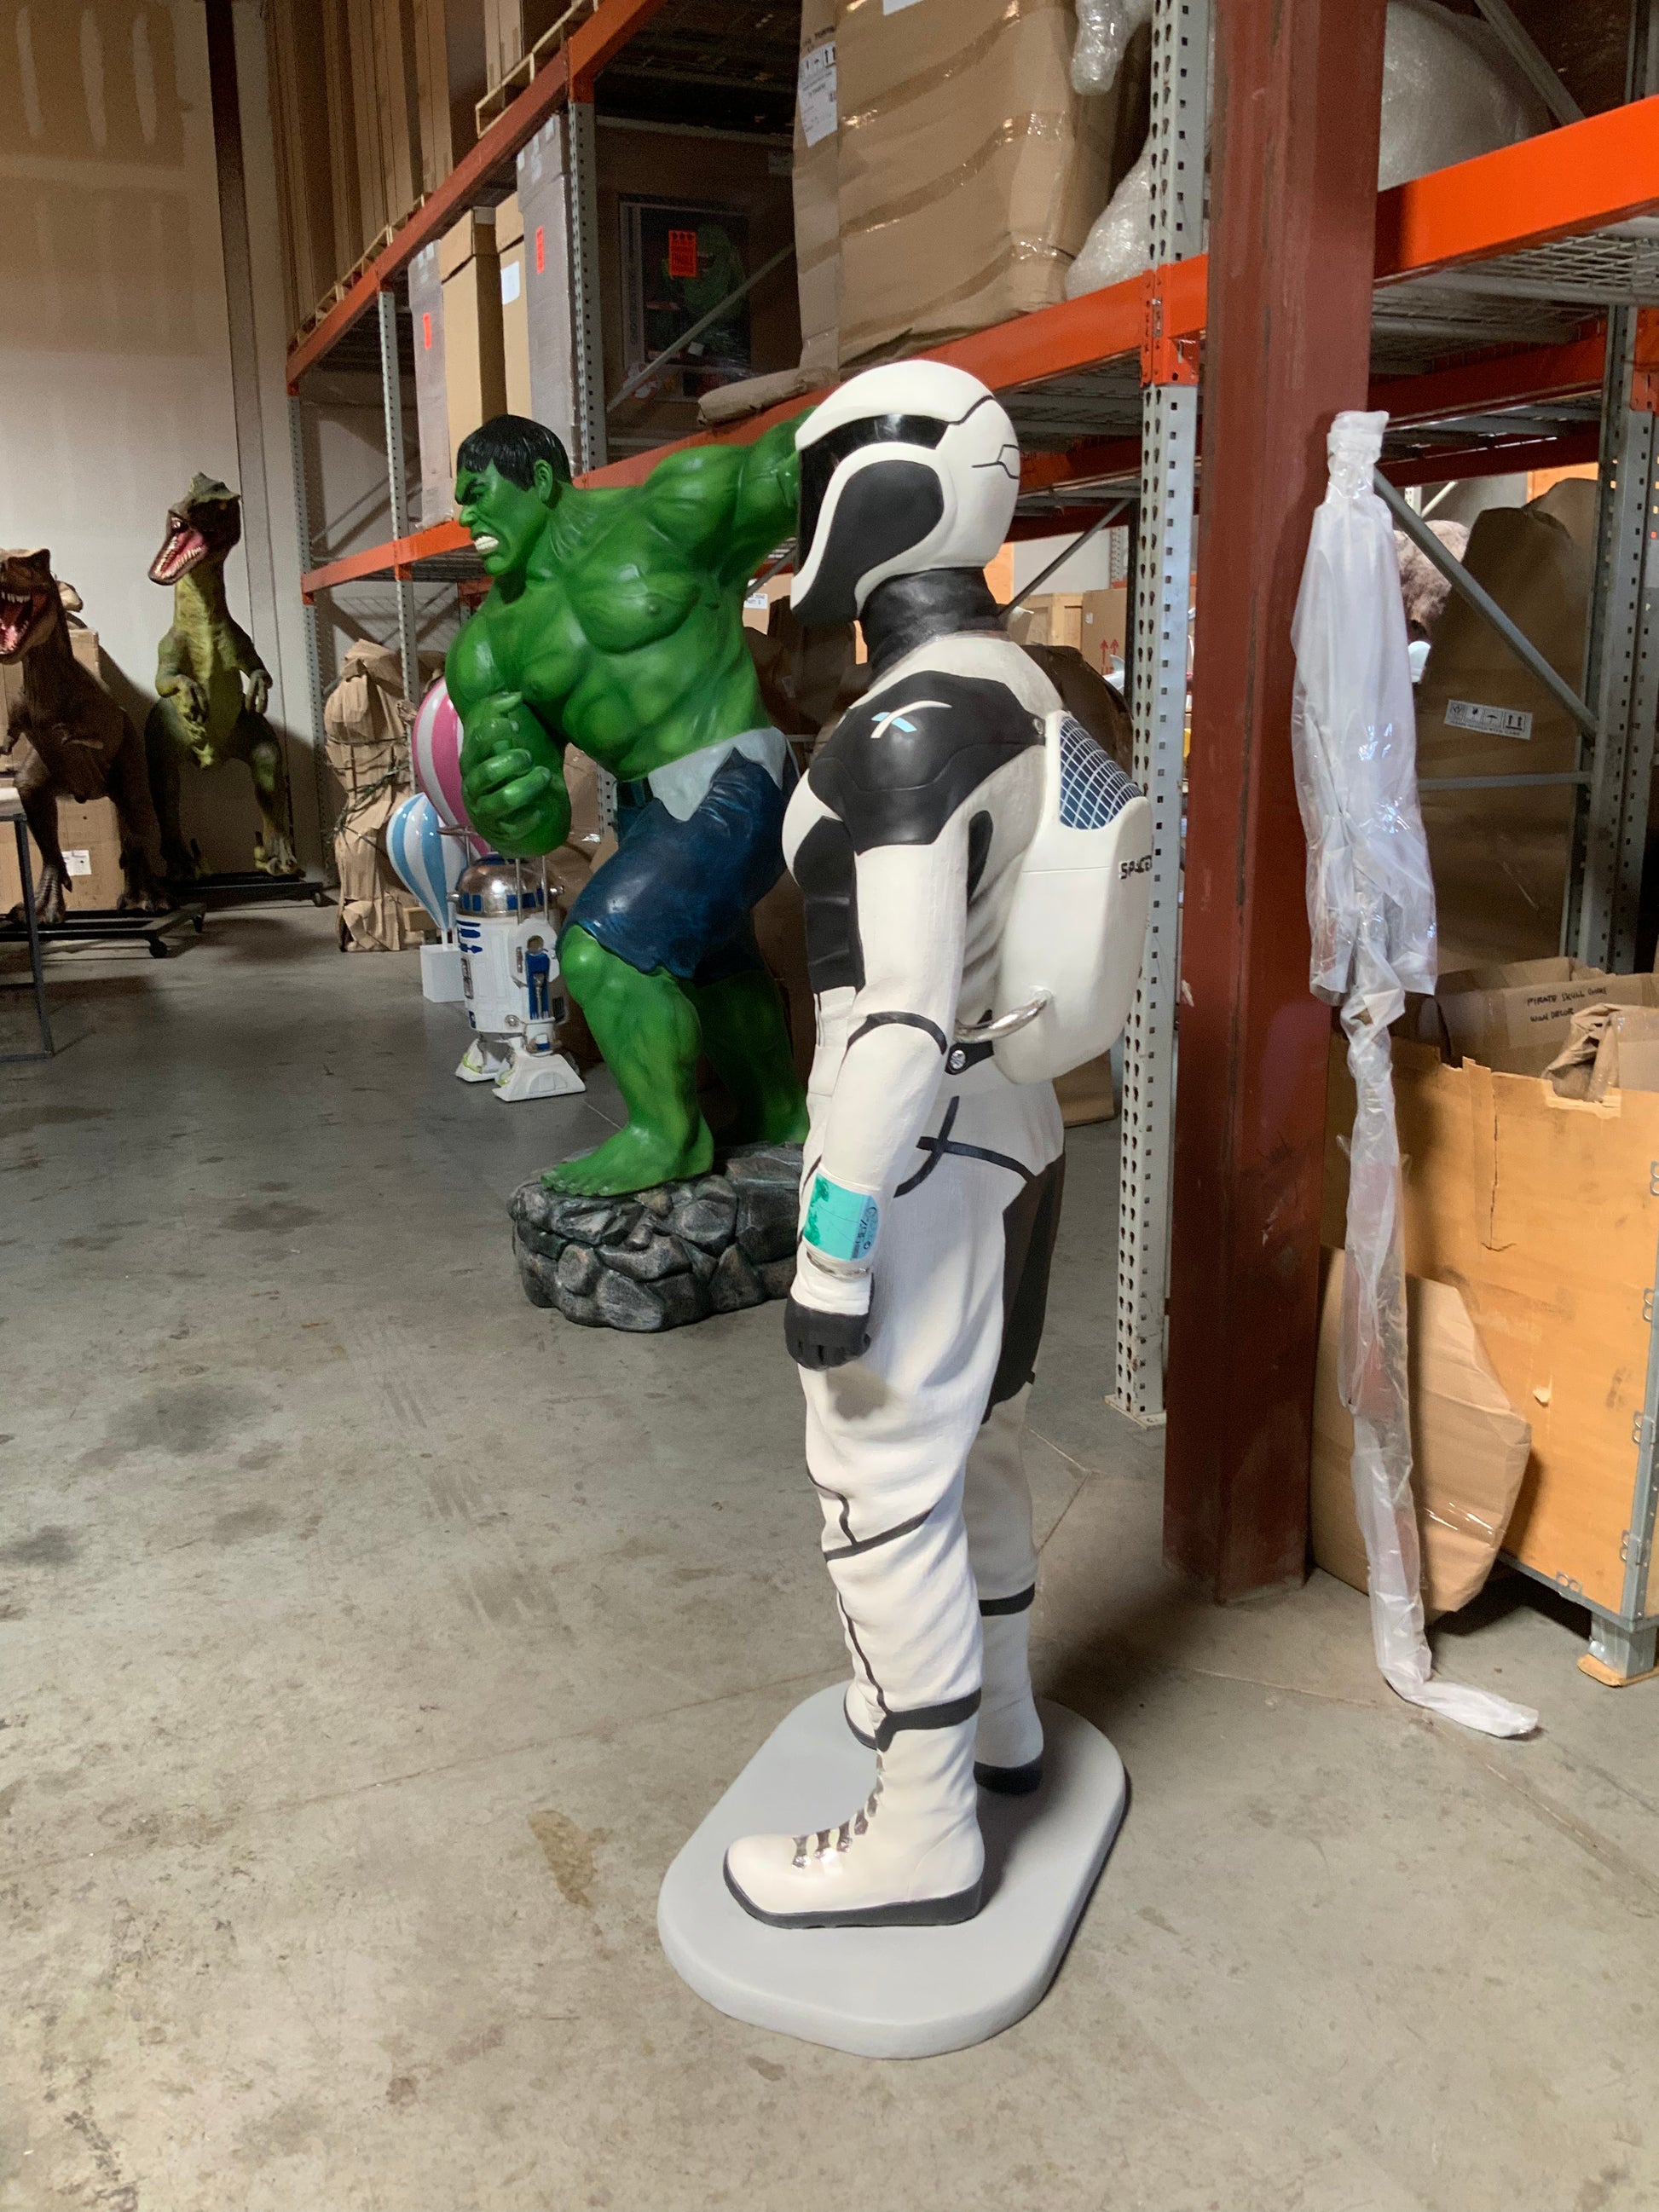 Space X Trooper Life Size Statue - LM Treasures Prop Rentals 